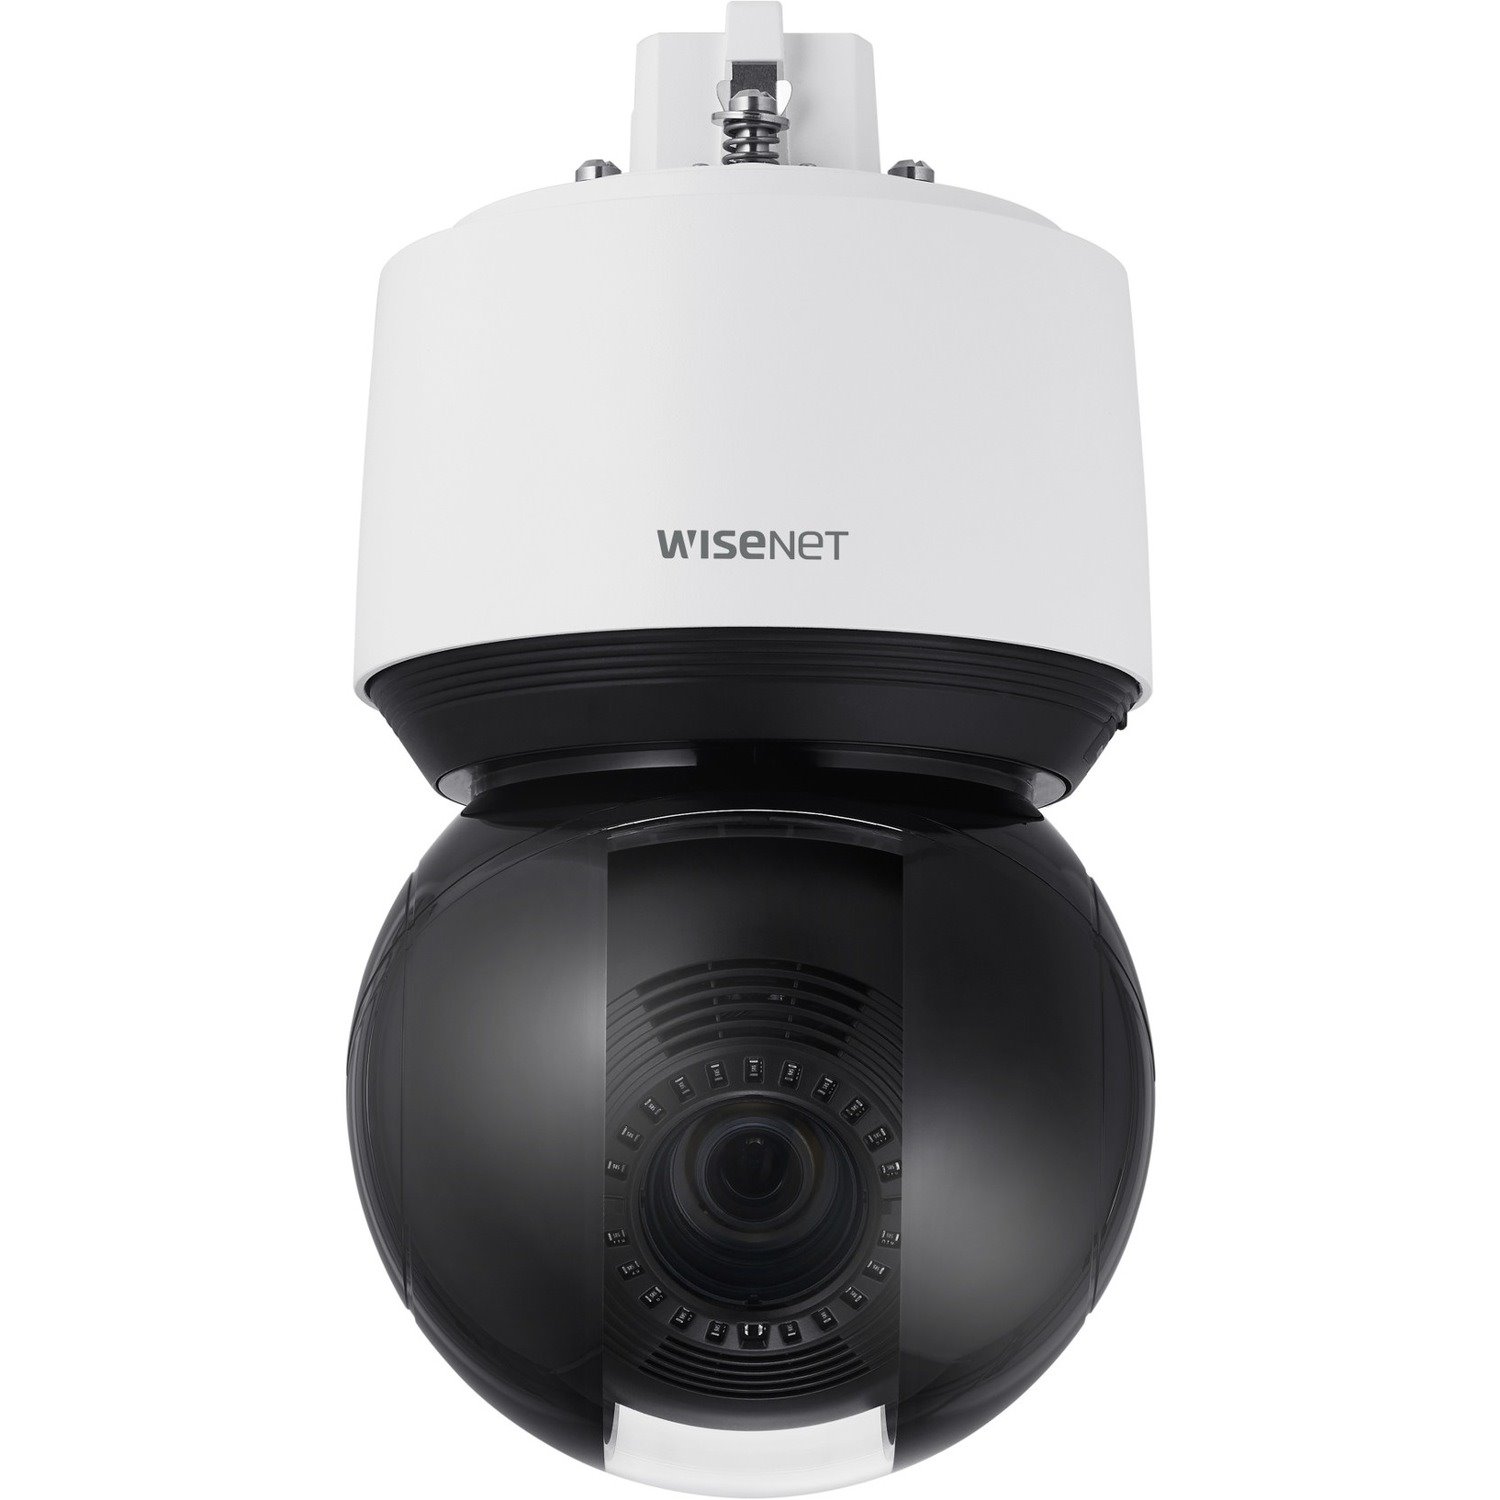 Wisenet XNP-6400 2 Megapixel Outdoor HD Network Camera - Dome